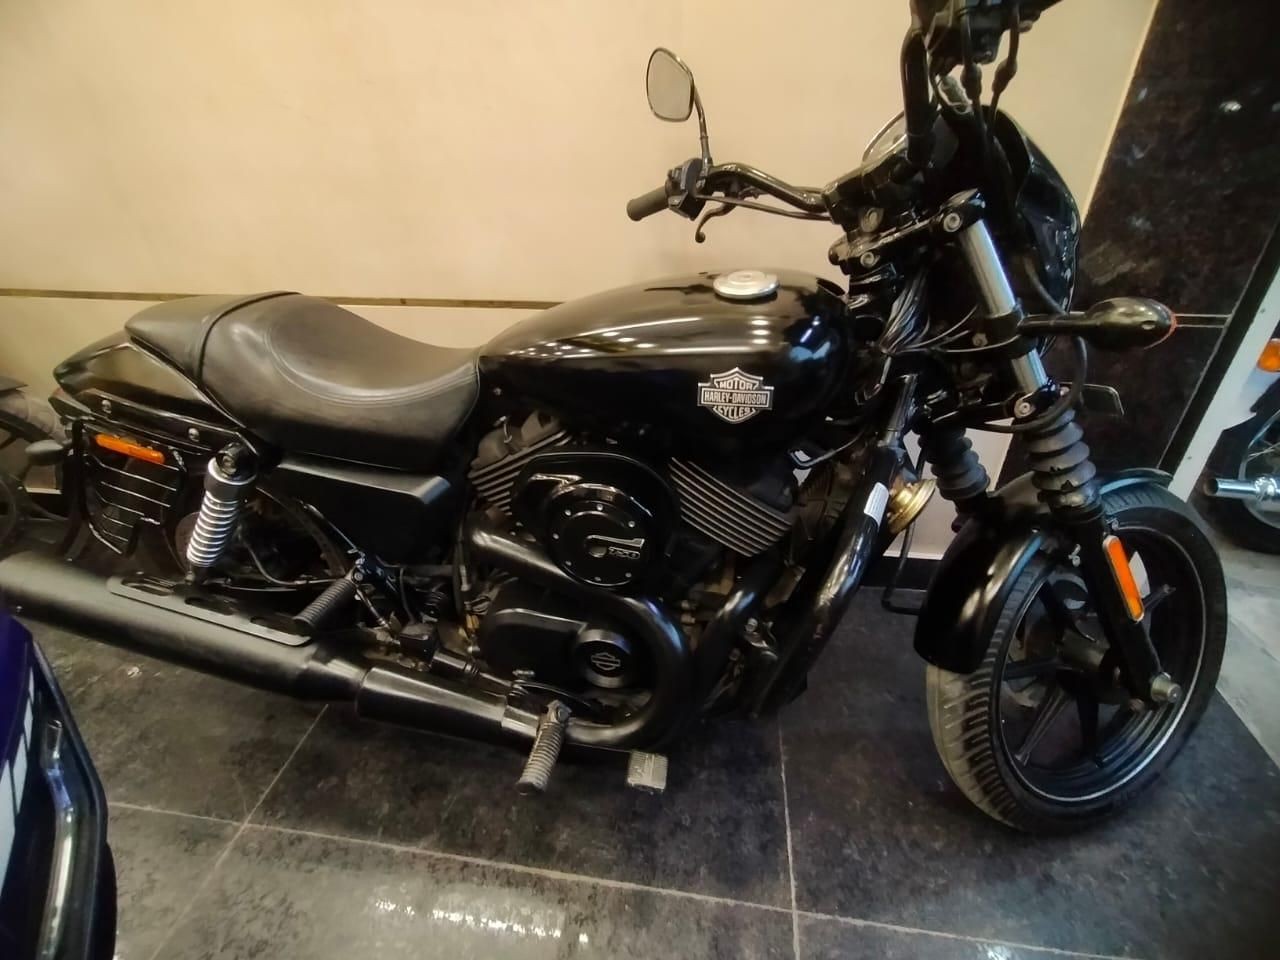 Used Harley-Davidson Street 750 2015